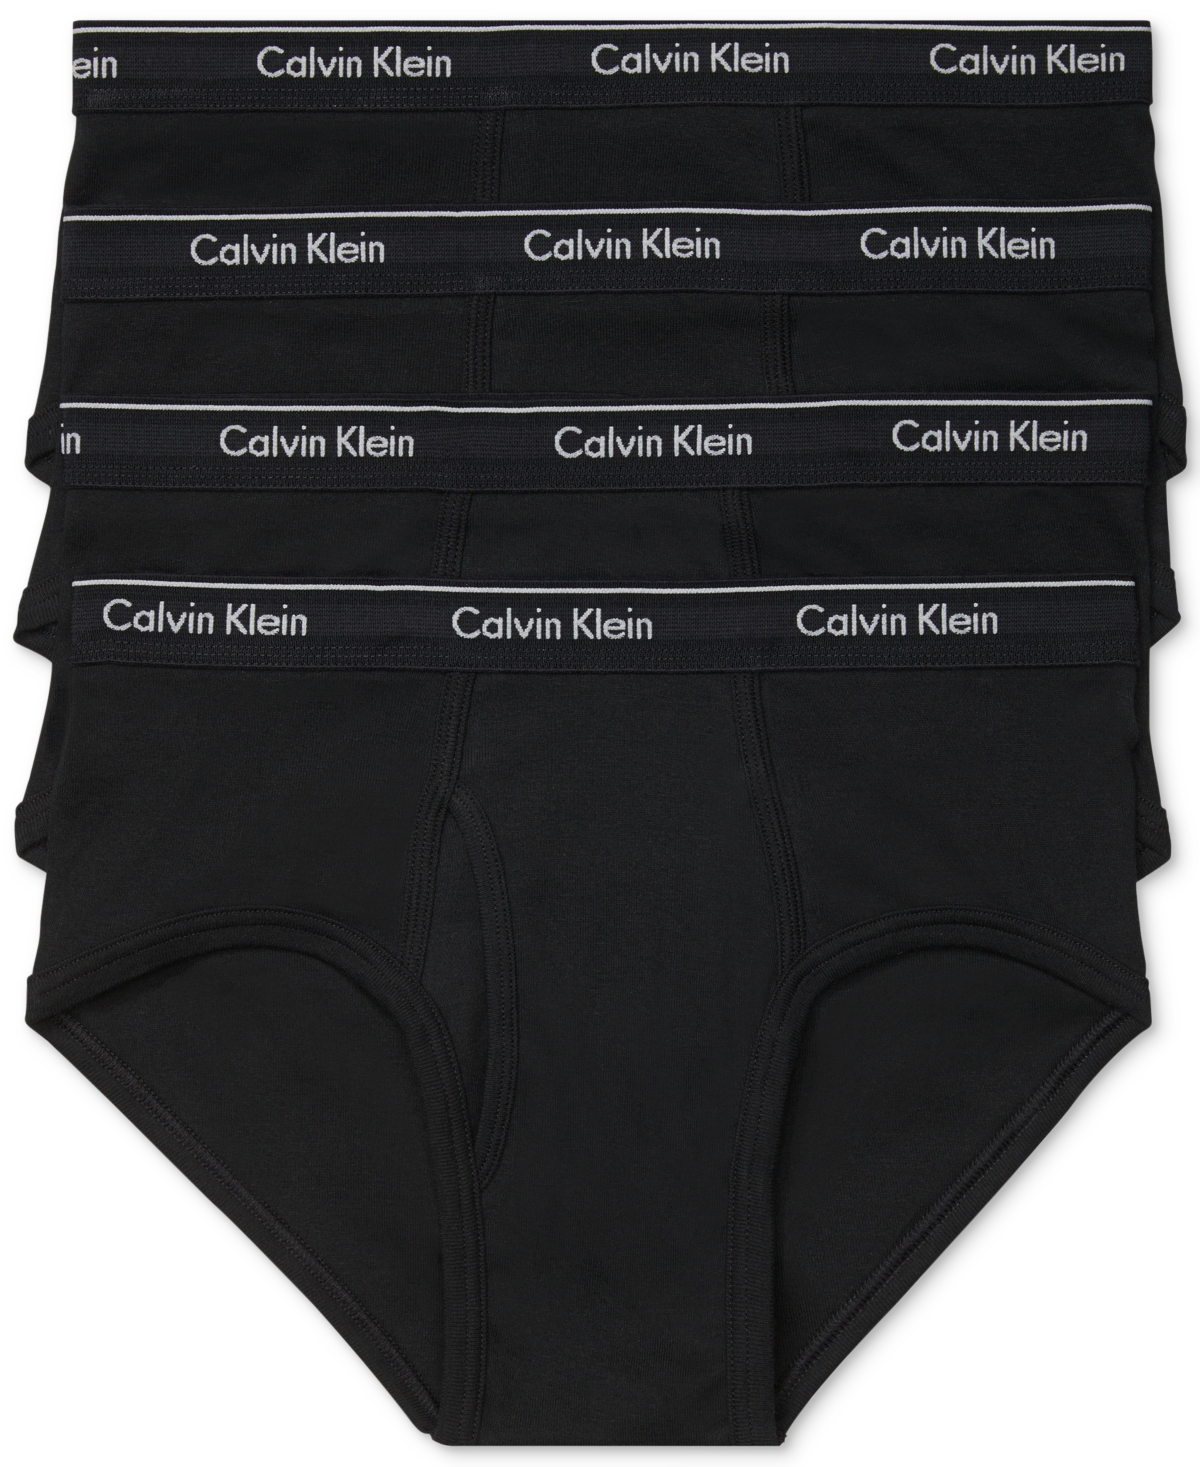 UPC 608926762639 product image for Calvin Klein Men's 4-Pack Cotton Classic Briefs | upcitemdb.com